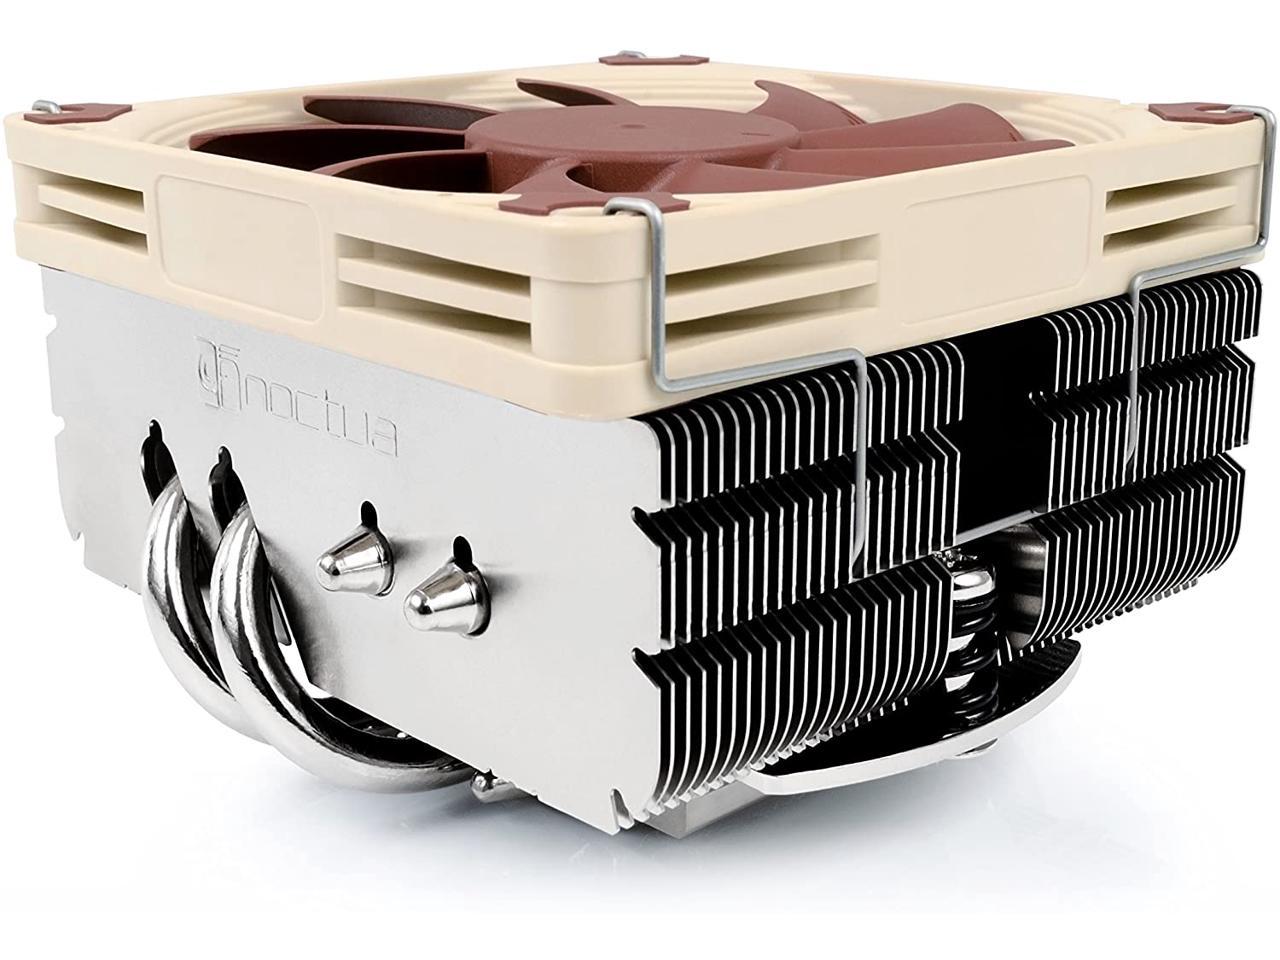 Noctua NH-L9x65 SE-AM4, Premium Low-profile CPU Cooler with 92mm Fan for AMD AM4 (Brown)